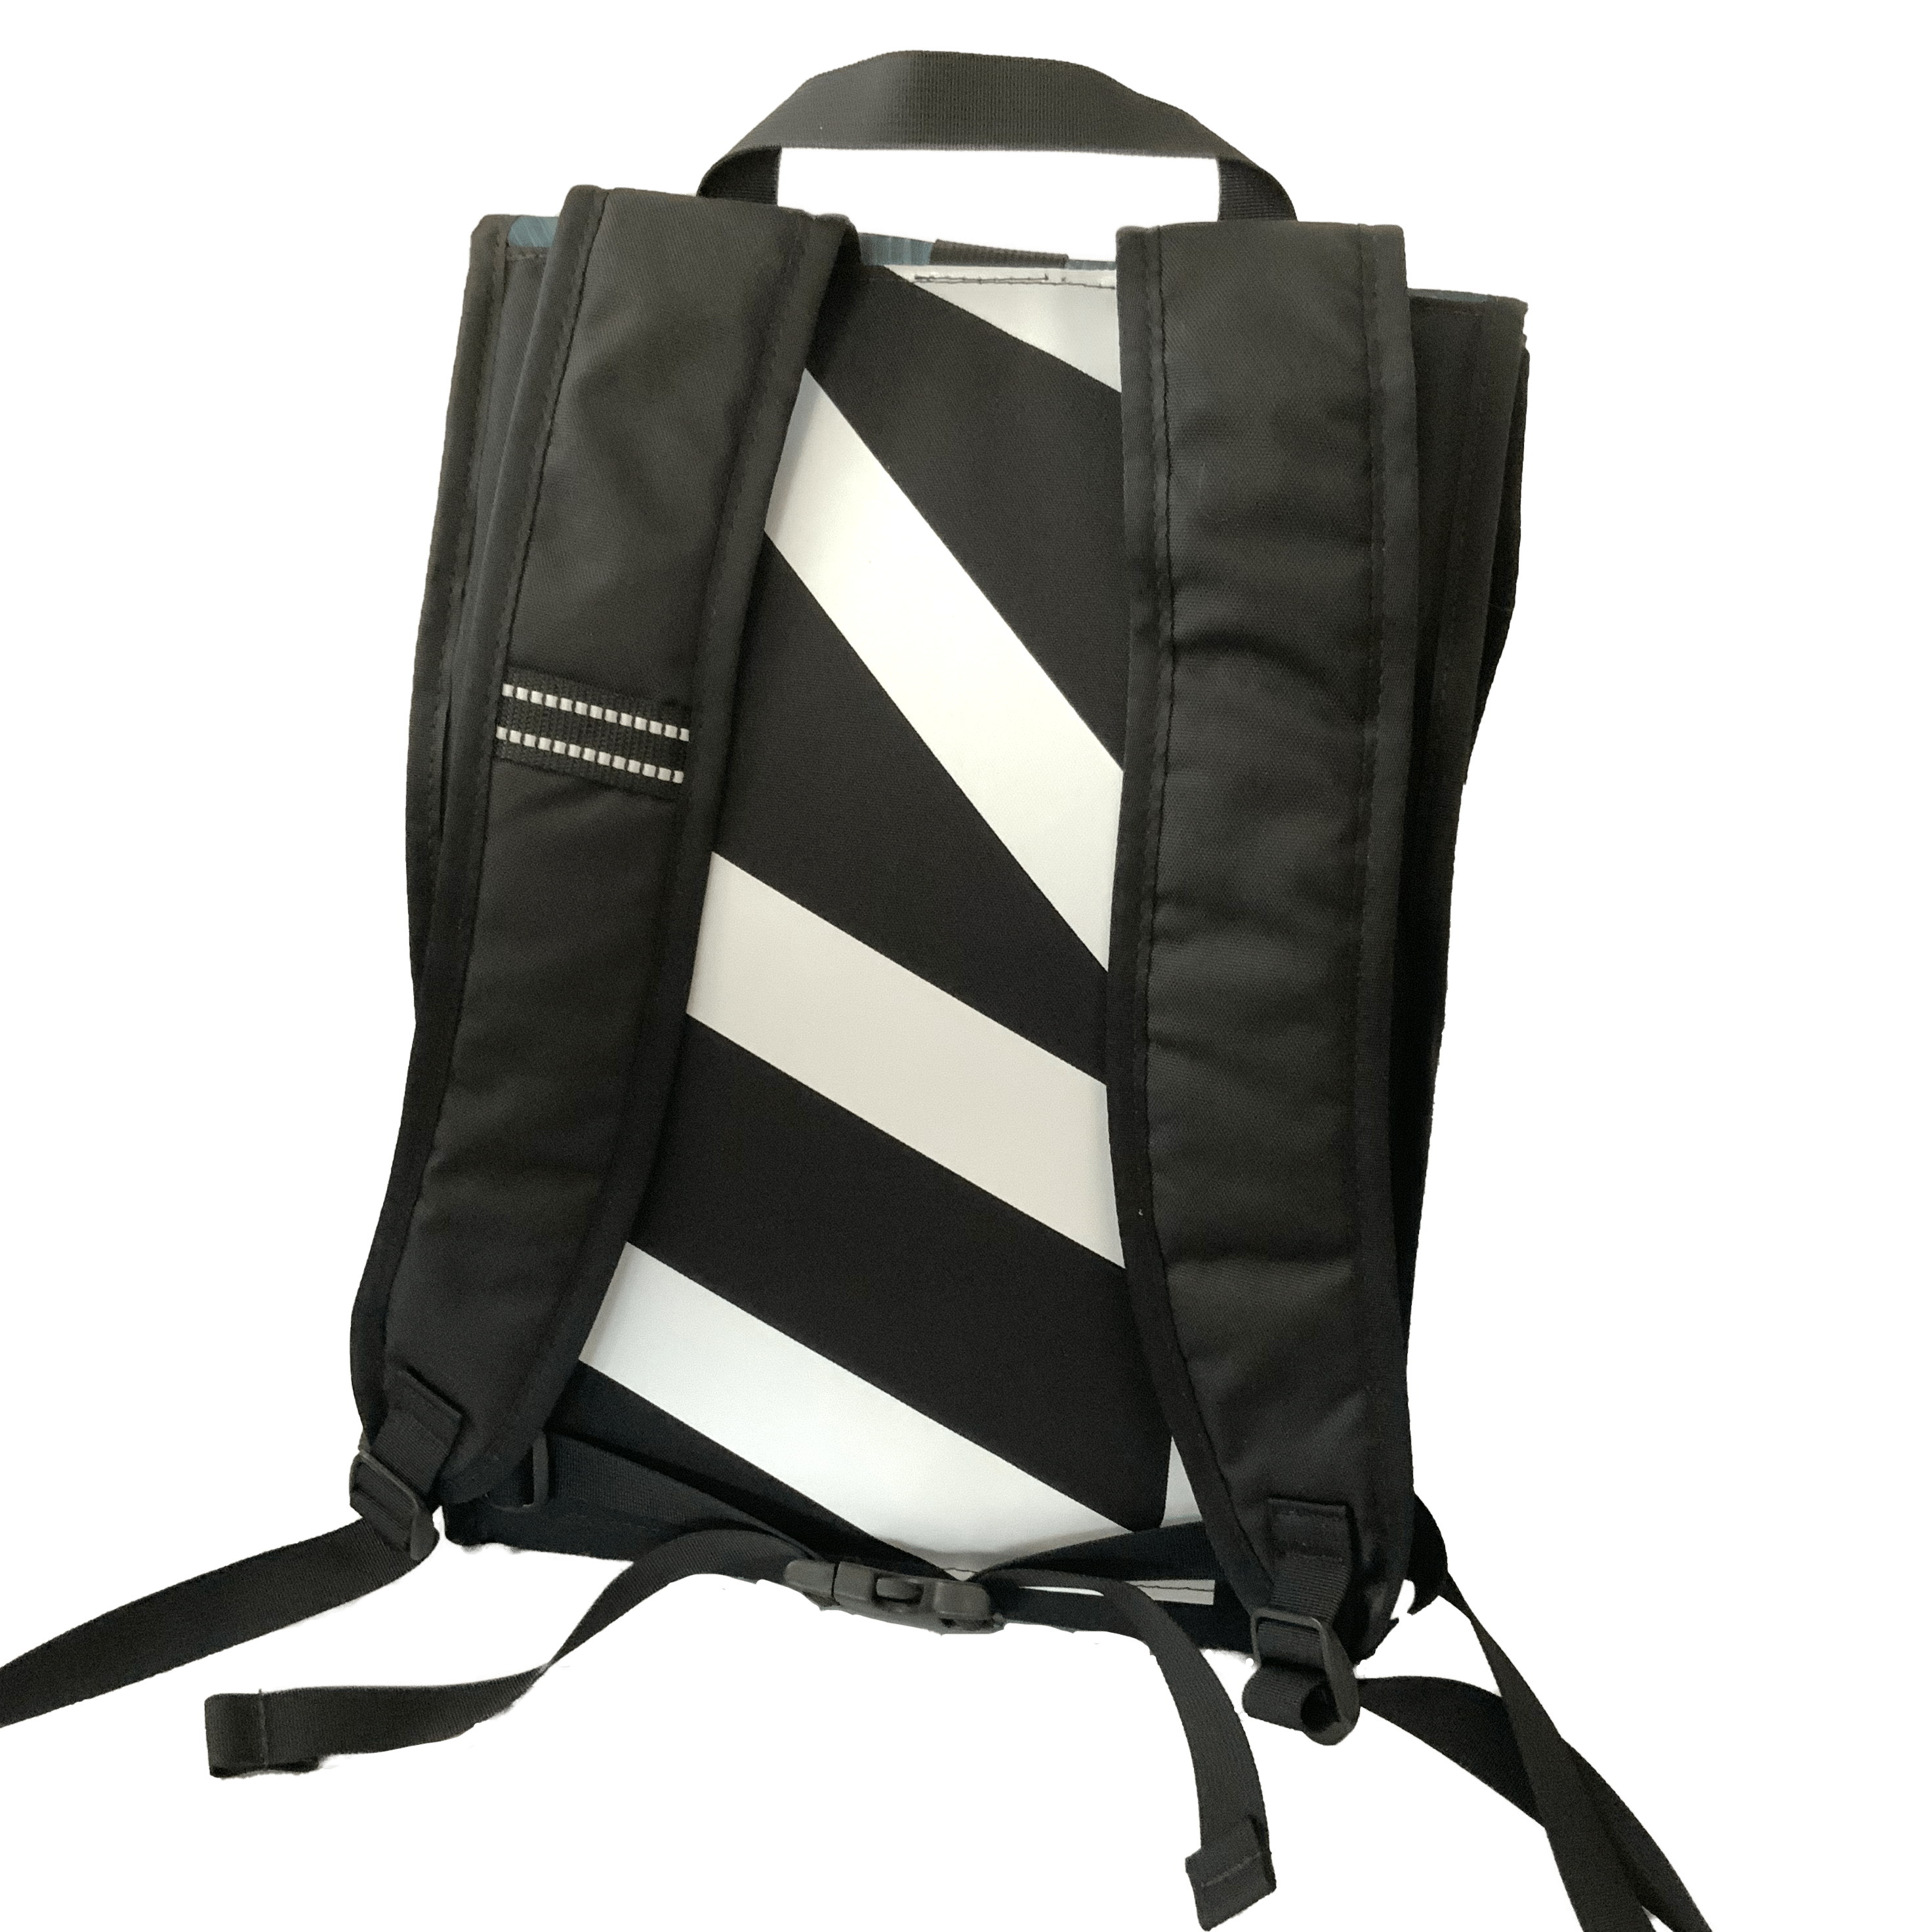 Green Guru | Joyride Roll-Top Backpack, Backpacks, Green Guru, Defiance Outdoor Gear Co.